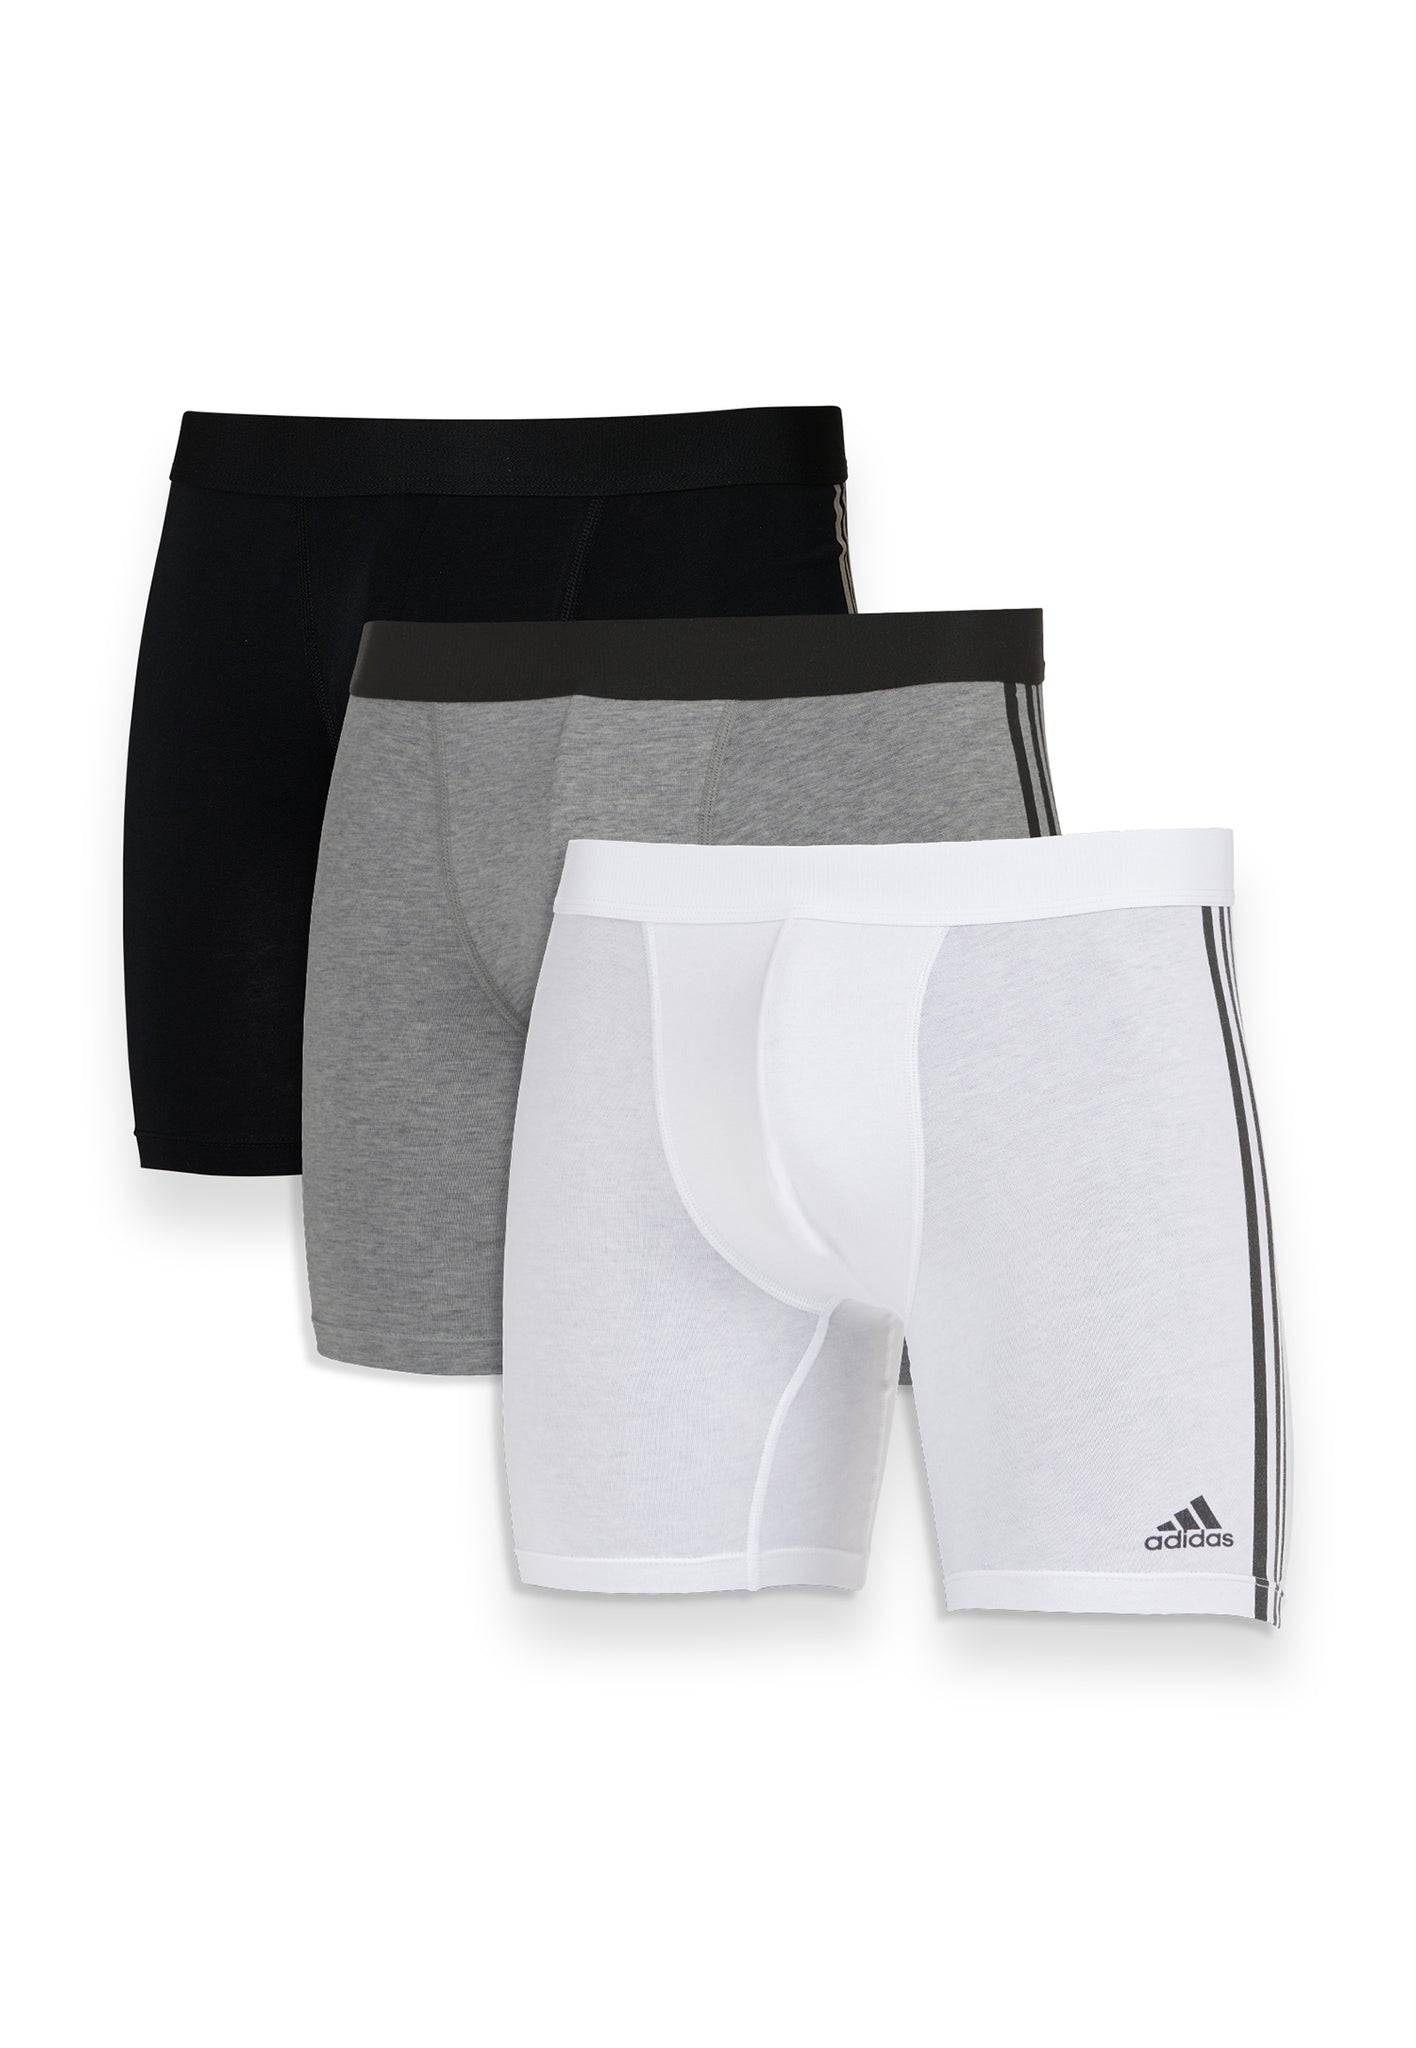 adidas Comfort Flex Cotton 3-Stripes Trunk Briefs (3 pairs